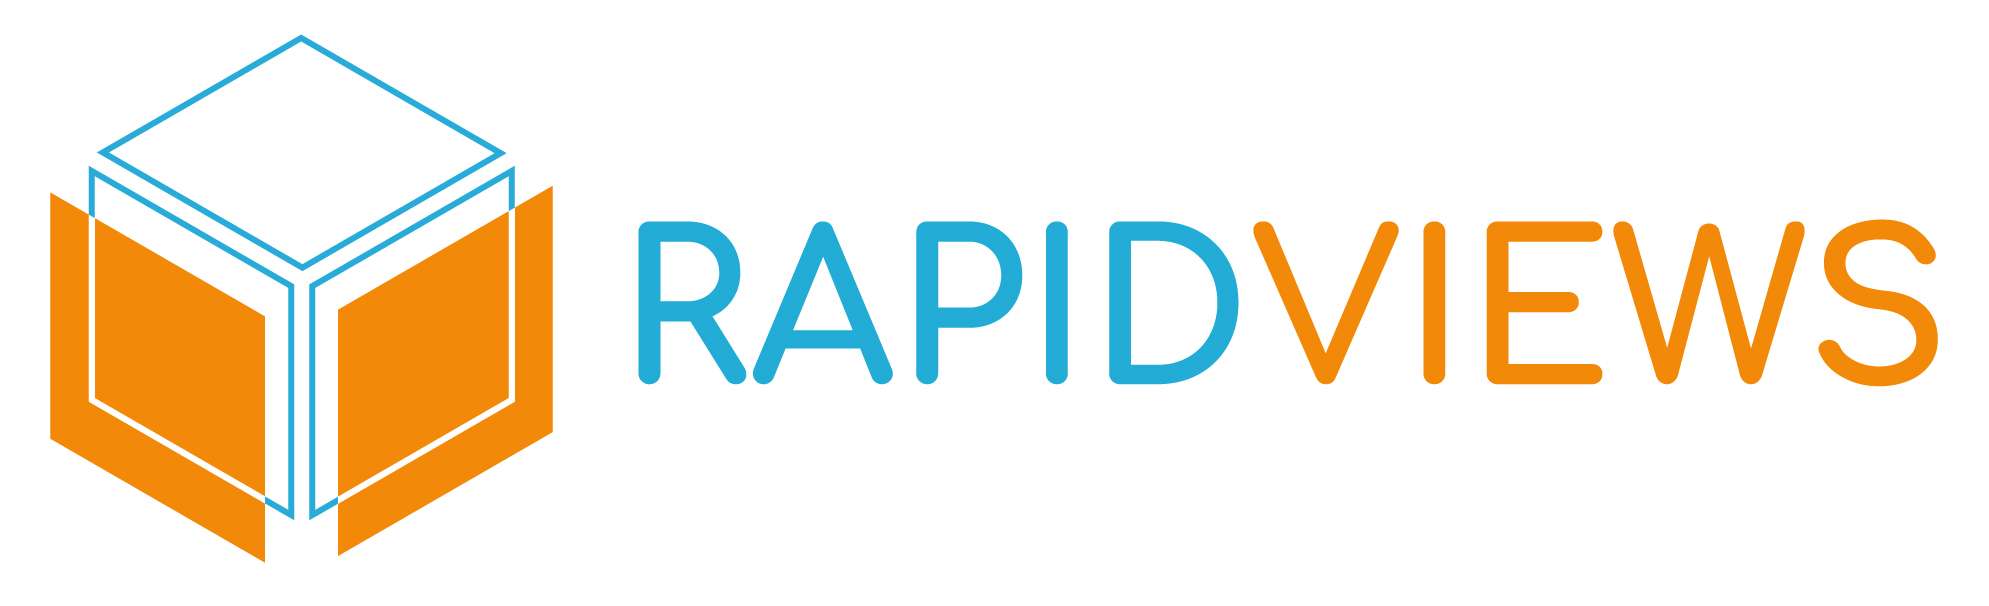 rapid views logo